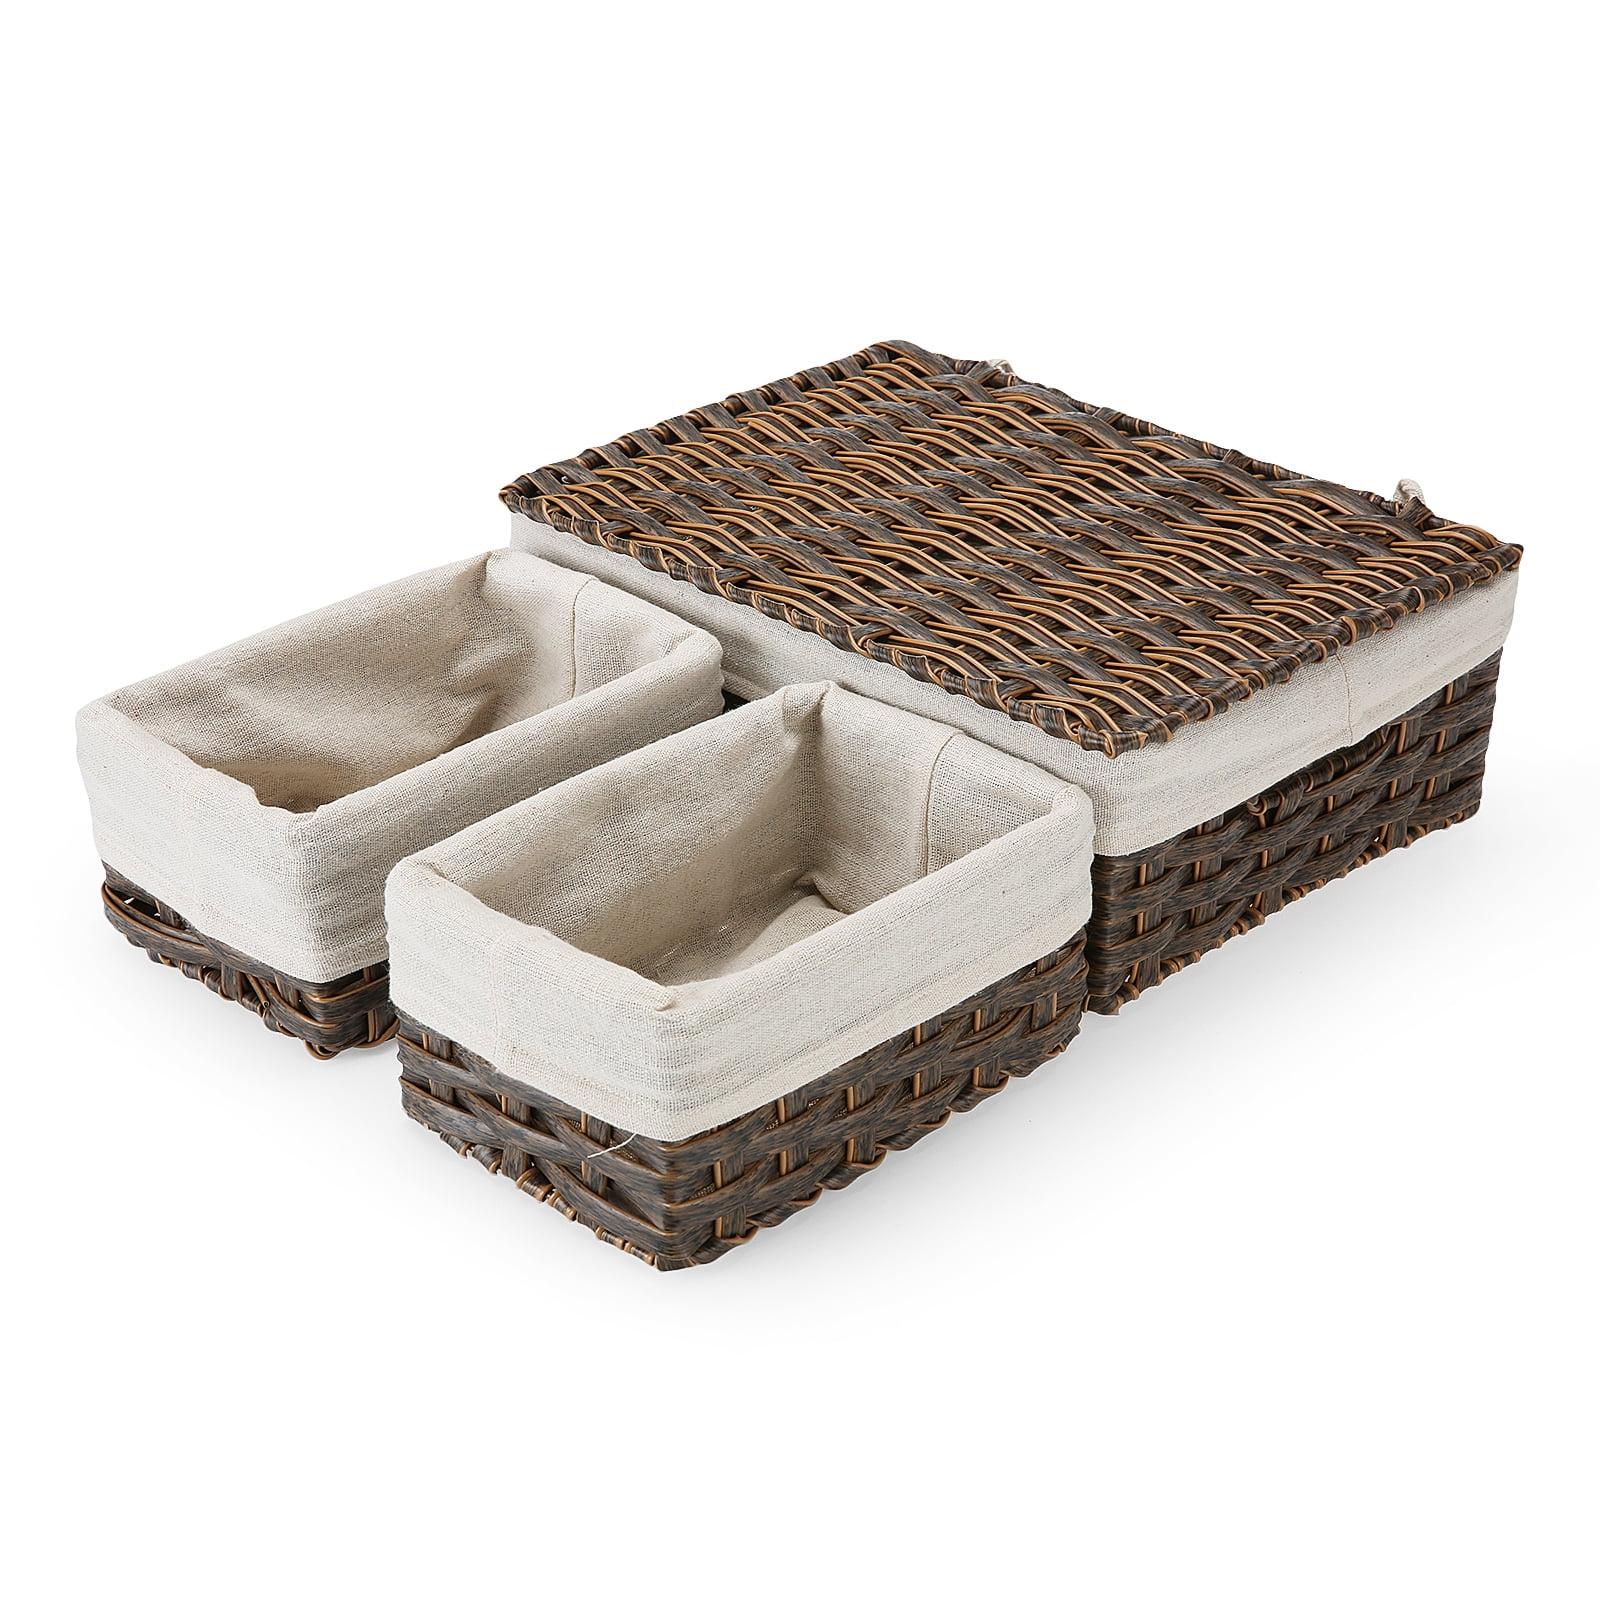 Wicker Storage Baskets Sets Of 3 Woven, Woven Bathroom Storage Baskets